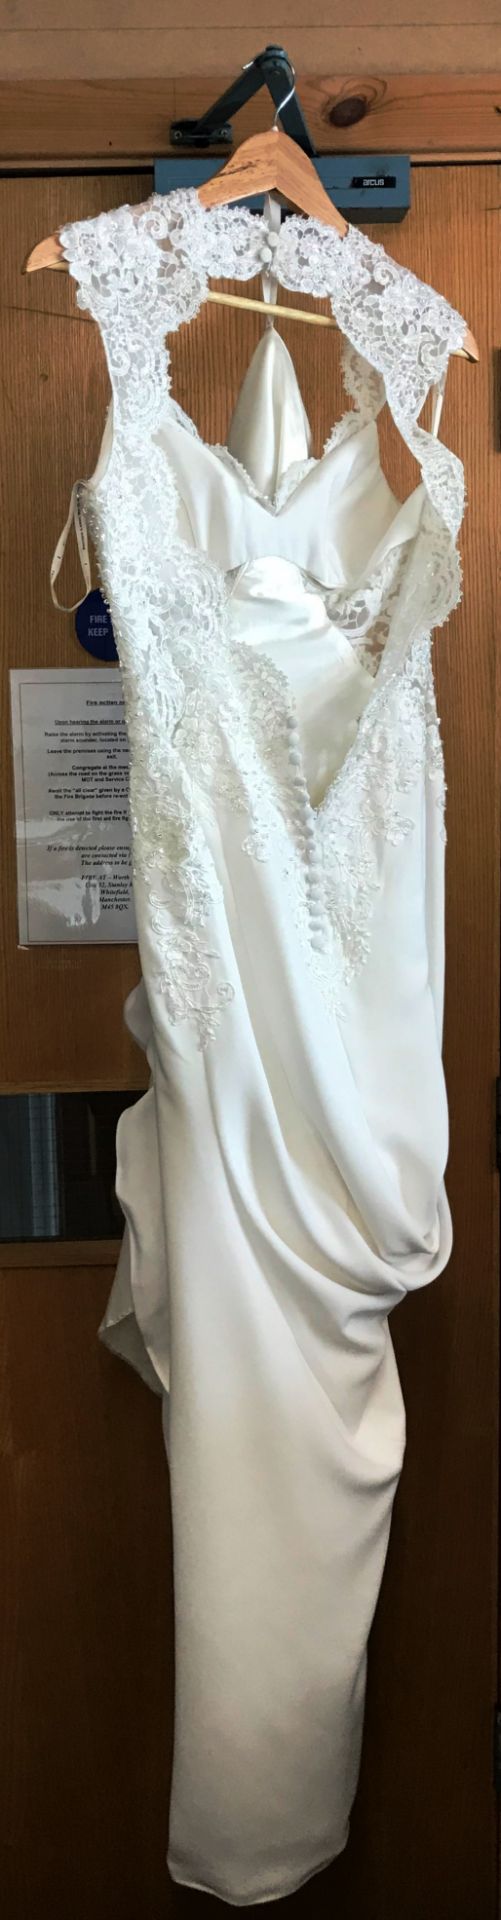 80 x Various Ex-Display Wedding Dresses - Brands inc: LadyBird, White Rose & Lillian West - Image 56 of 60